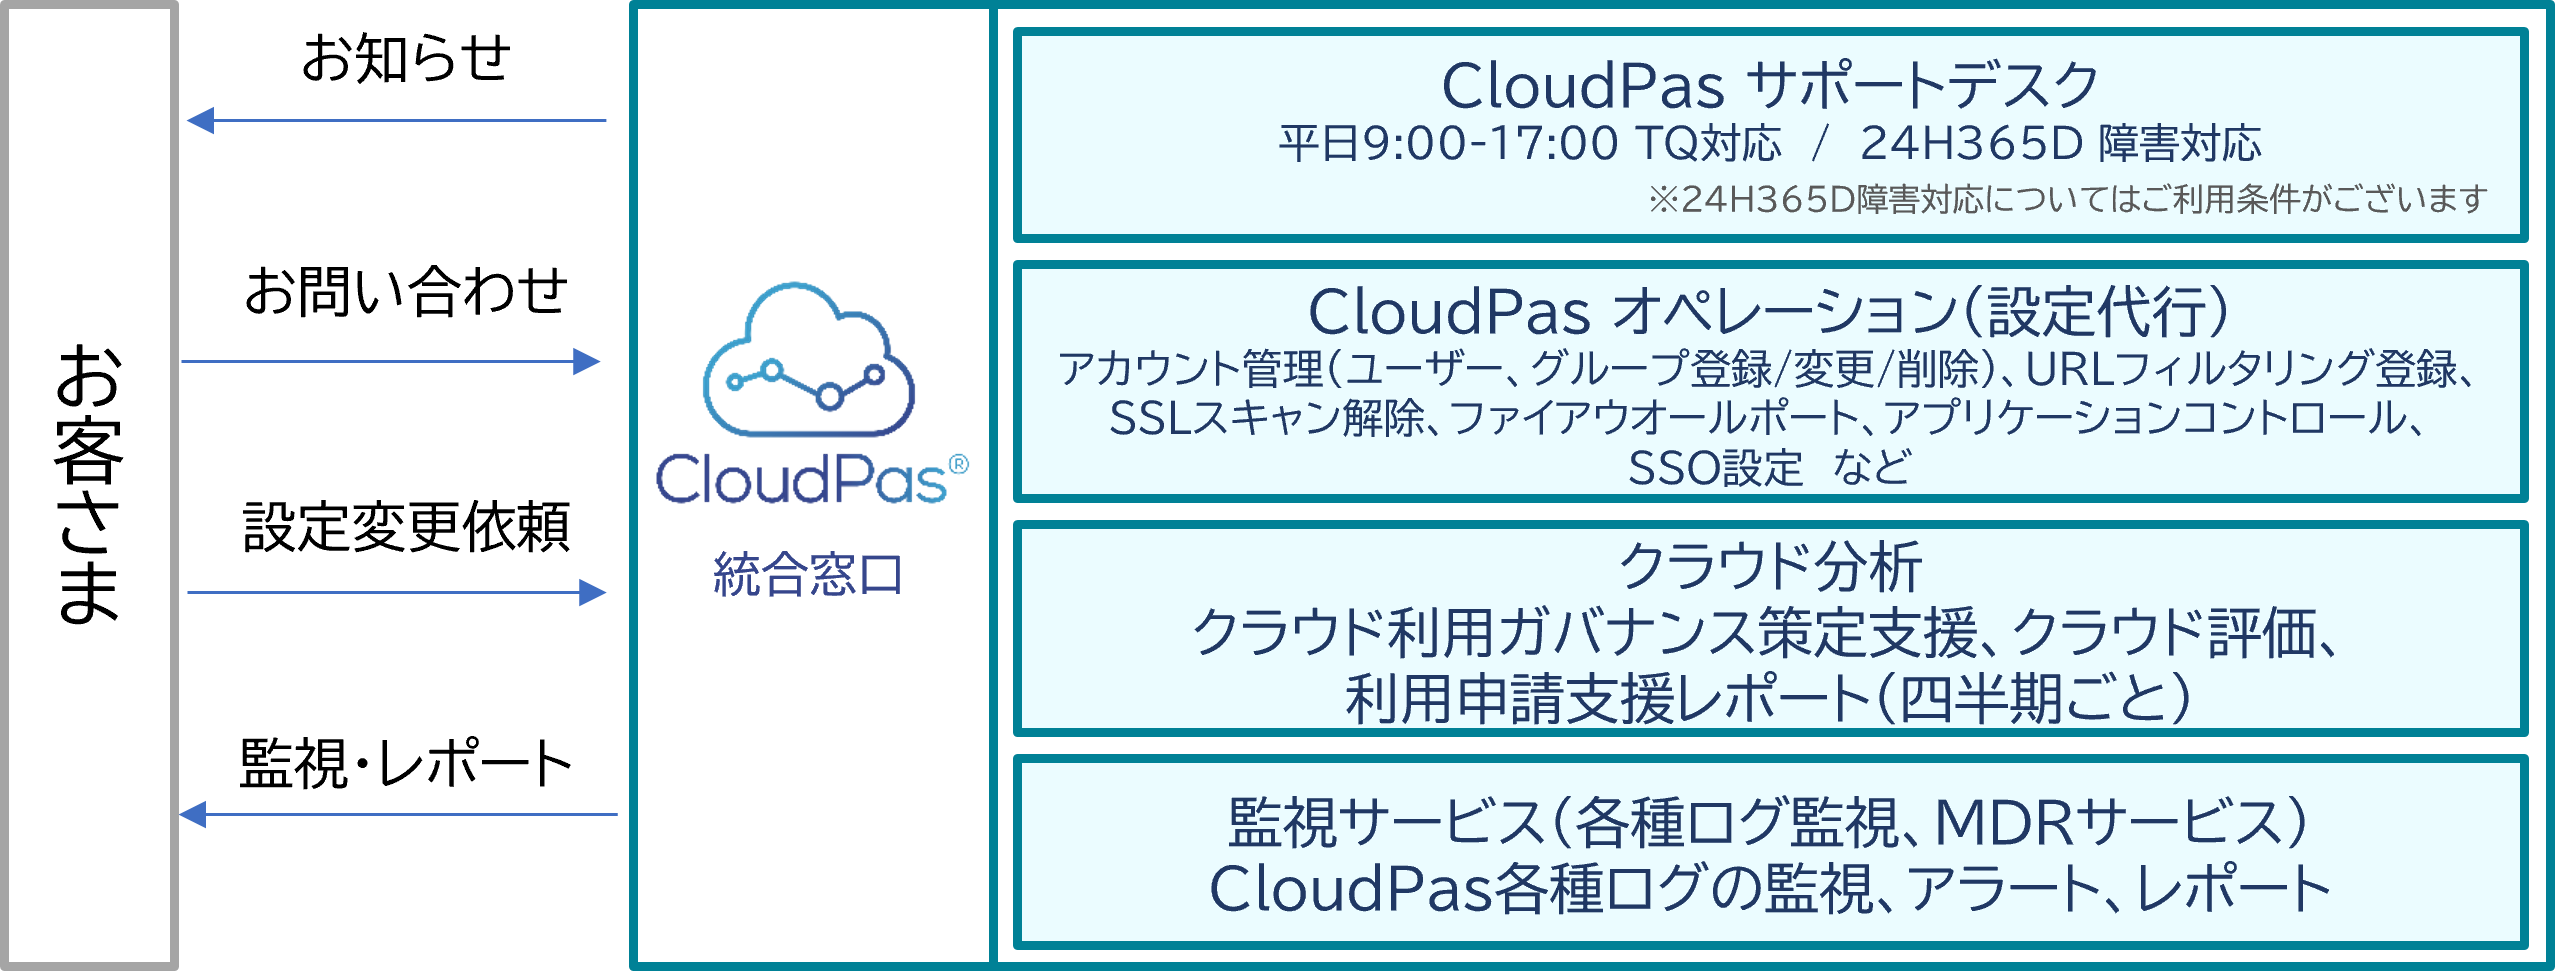 CloudPas MSS 概要